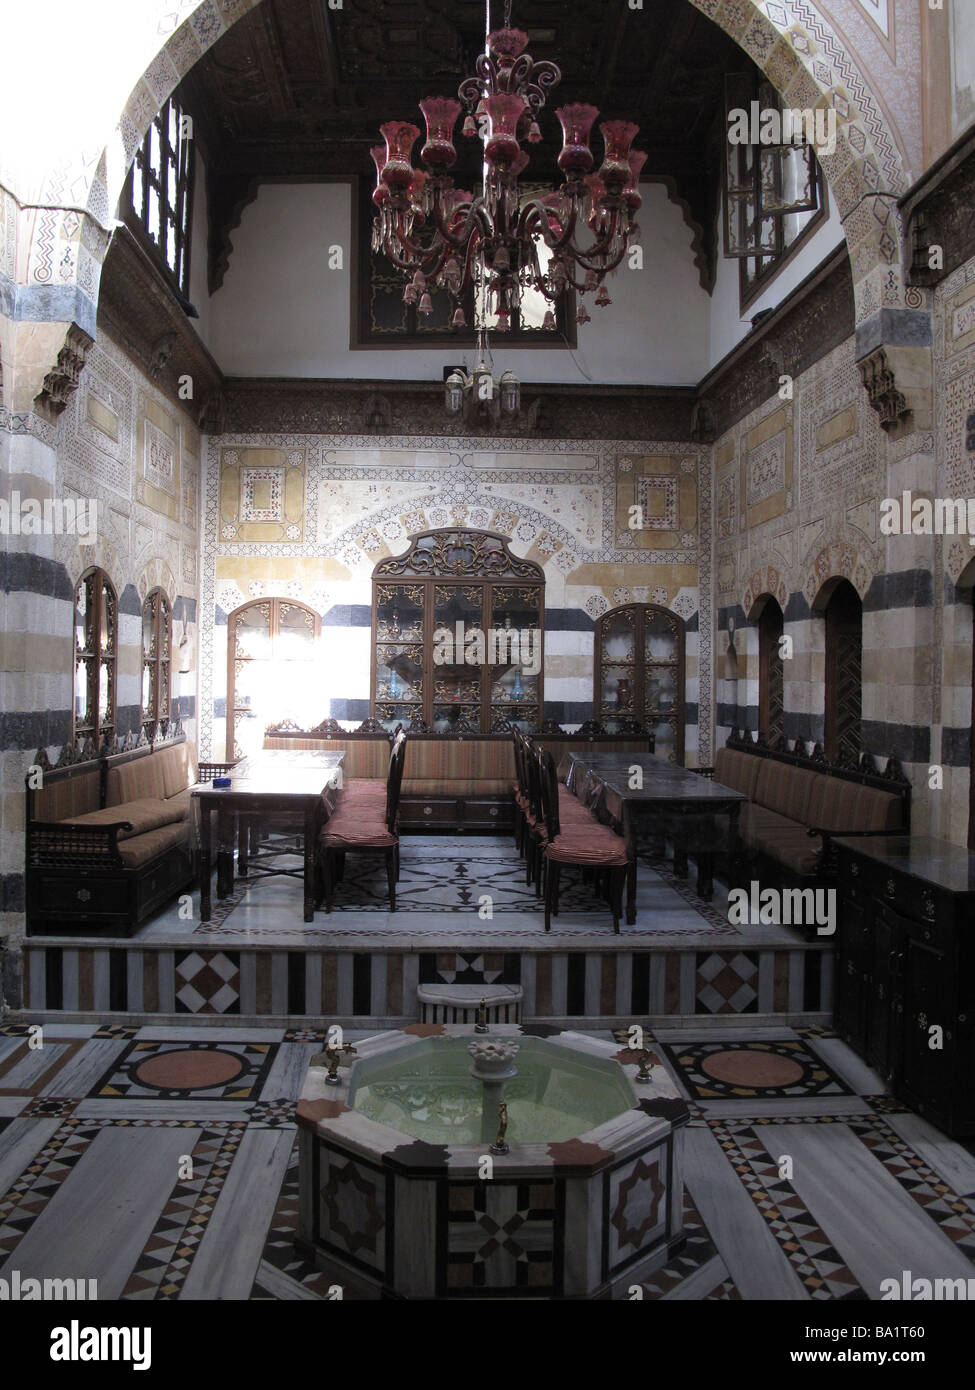 Bayt Jabri Restaurant Damascus SYRIA Restaurante Beit Jabri Damasco SIRIA Stock Photo